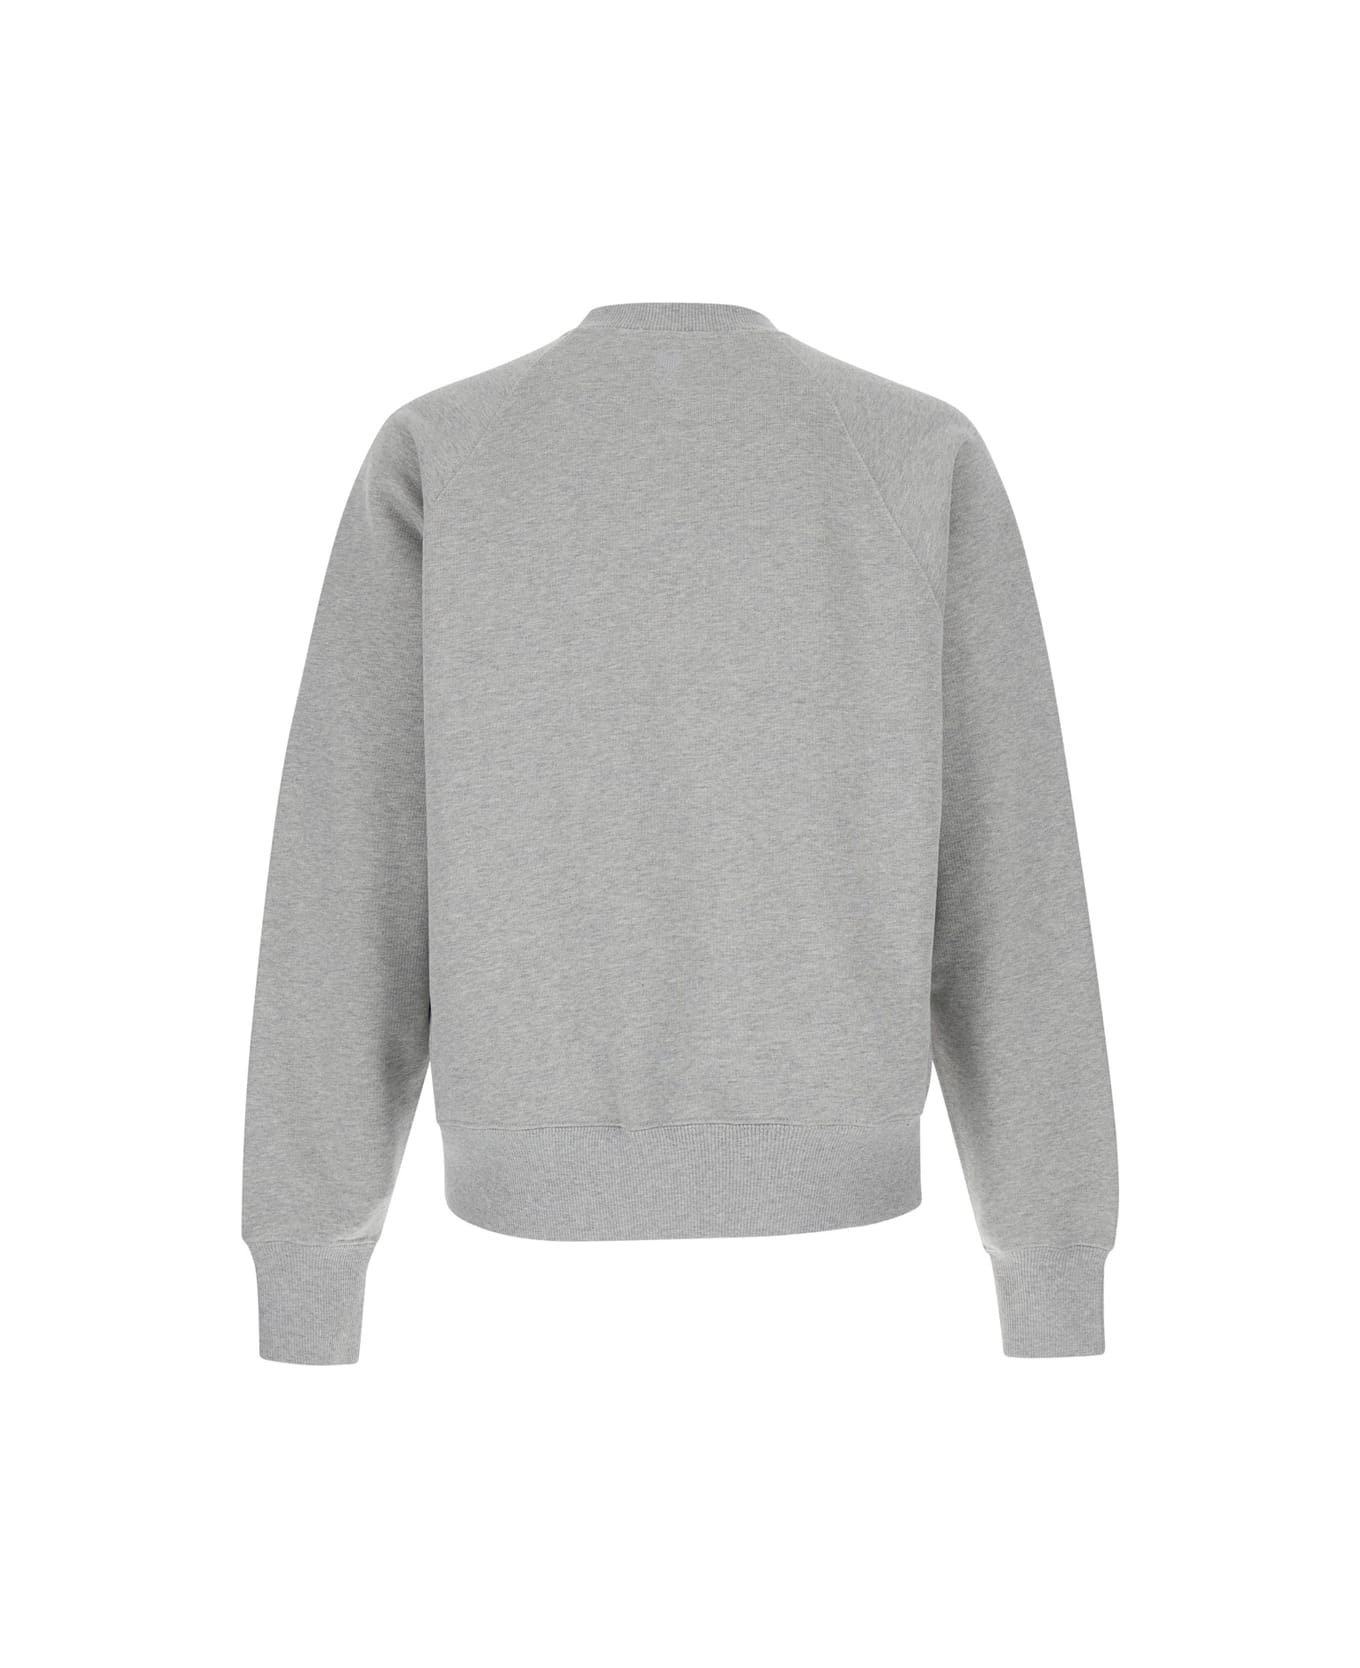 Ami Alexandre Mattiussi Grey Crew Neck Sweater In Cotton Man - Grey フリース